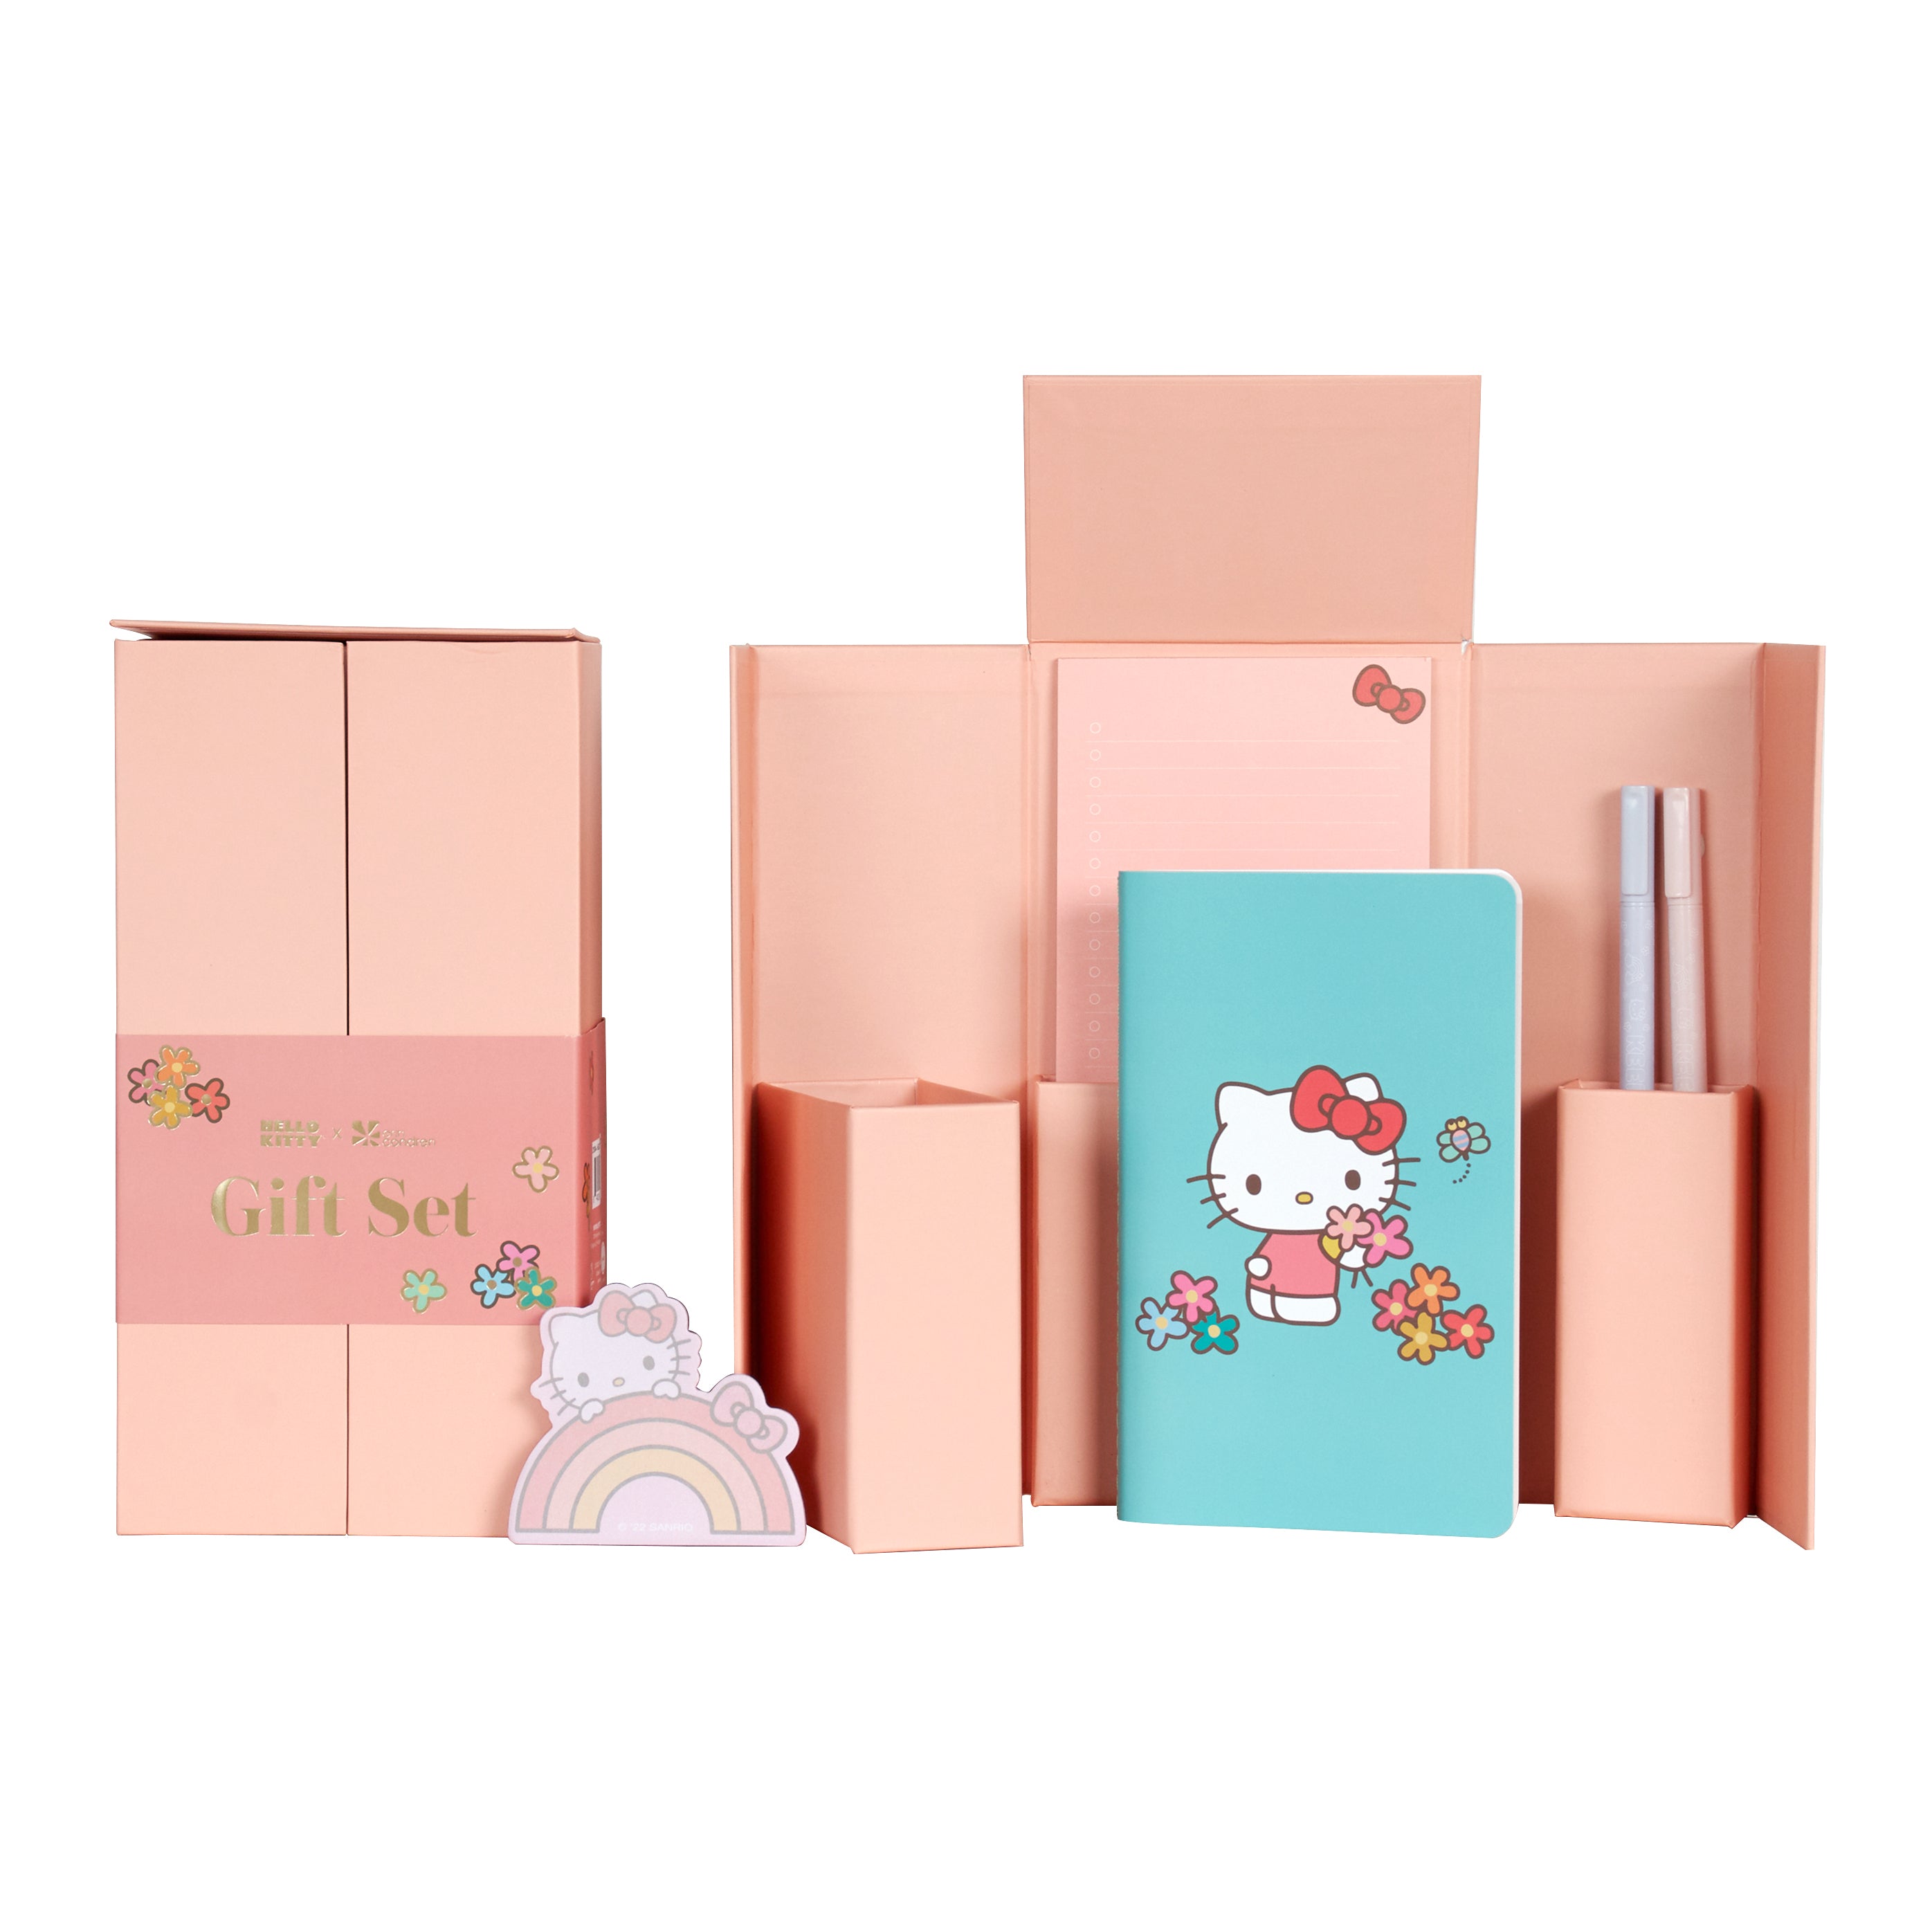 Sanrio Characters - Face Gift Bag - Hello Kitty